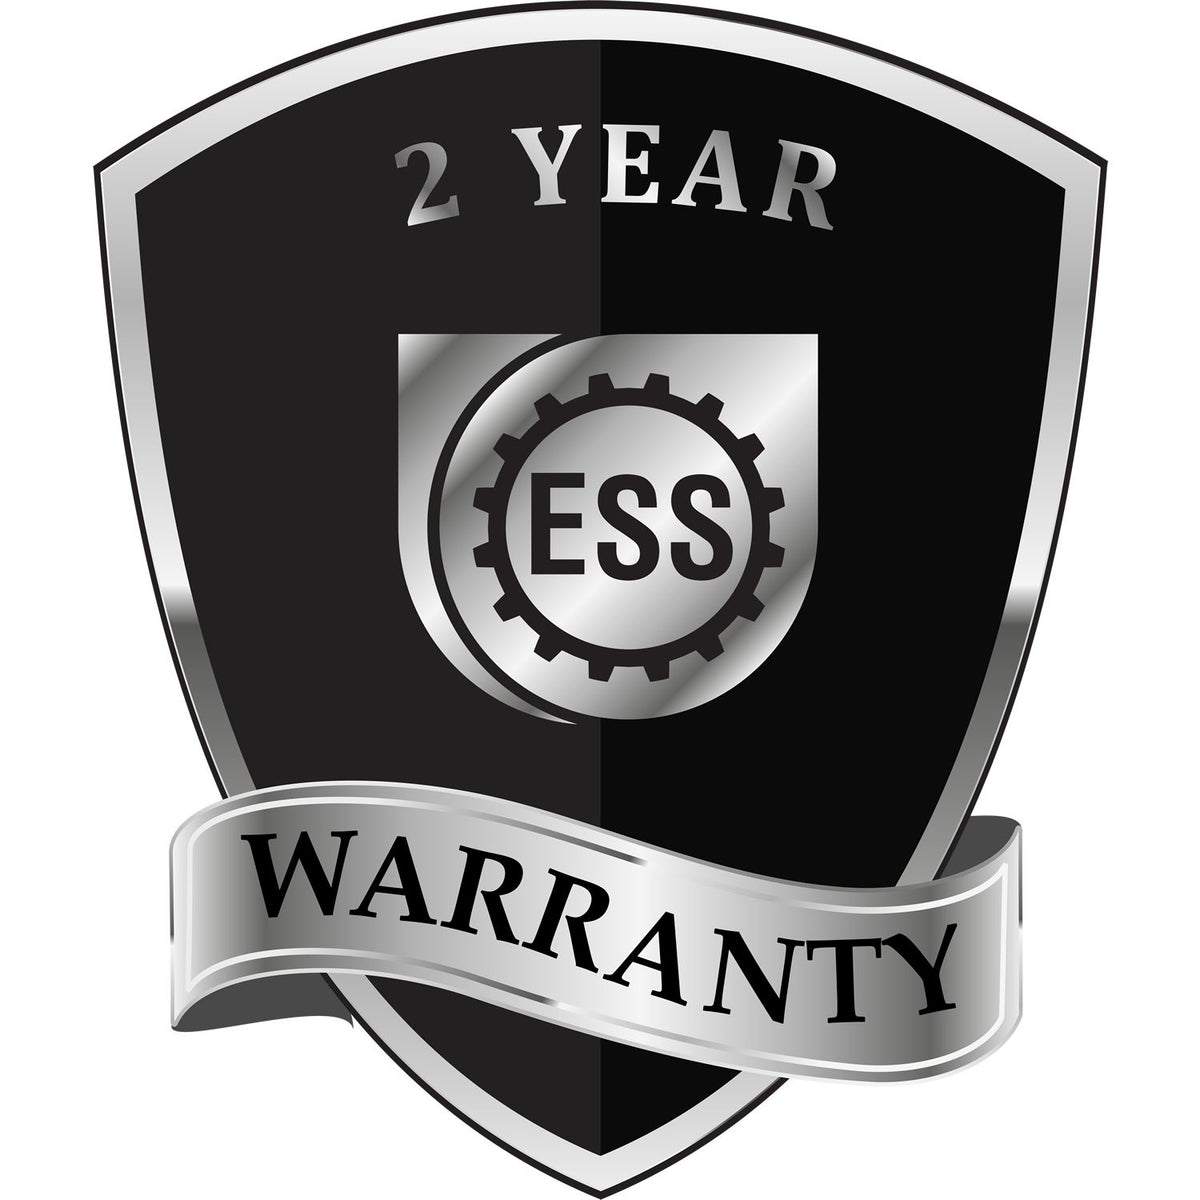 A black and silver badge or emblem showing warranty information for the Kansas Geologist Desk Seal